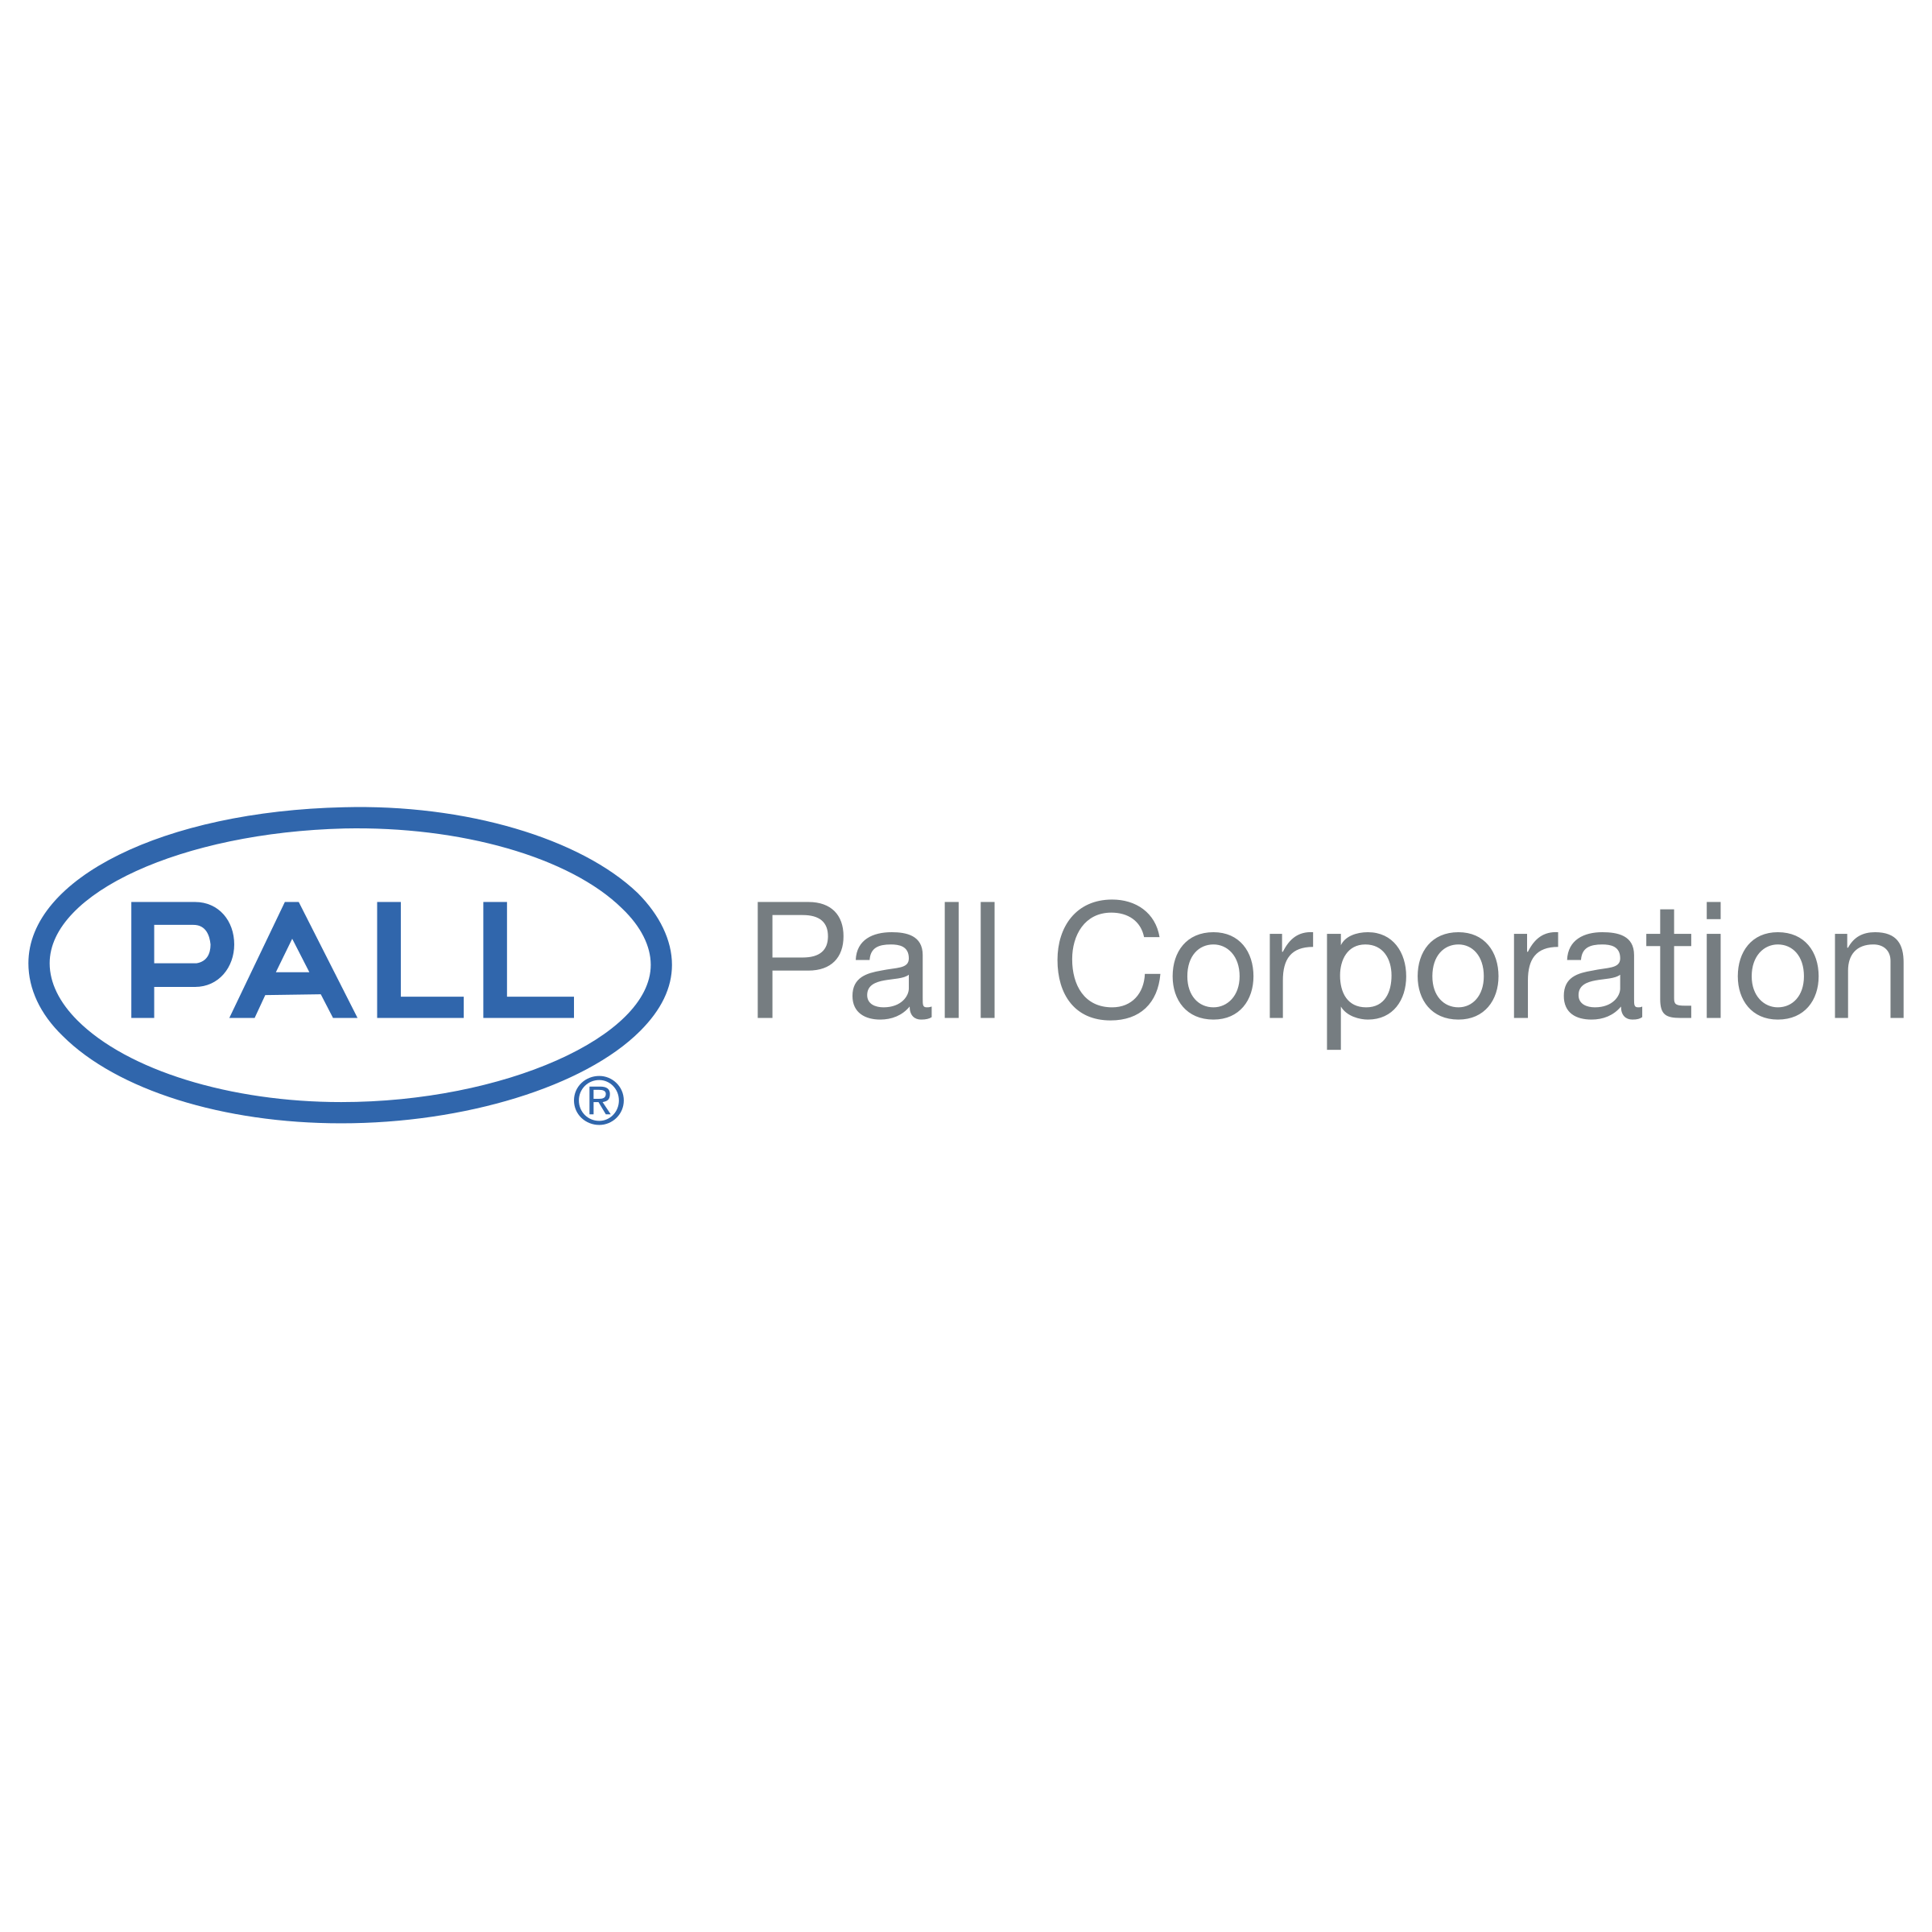 Pall Logo - Pall Logo PNG Transparent & SVG Vector